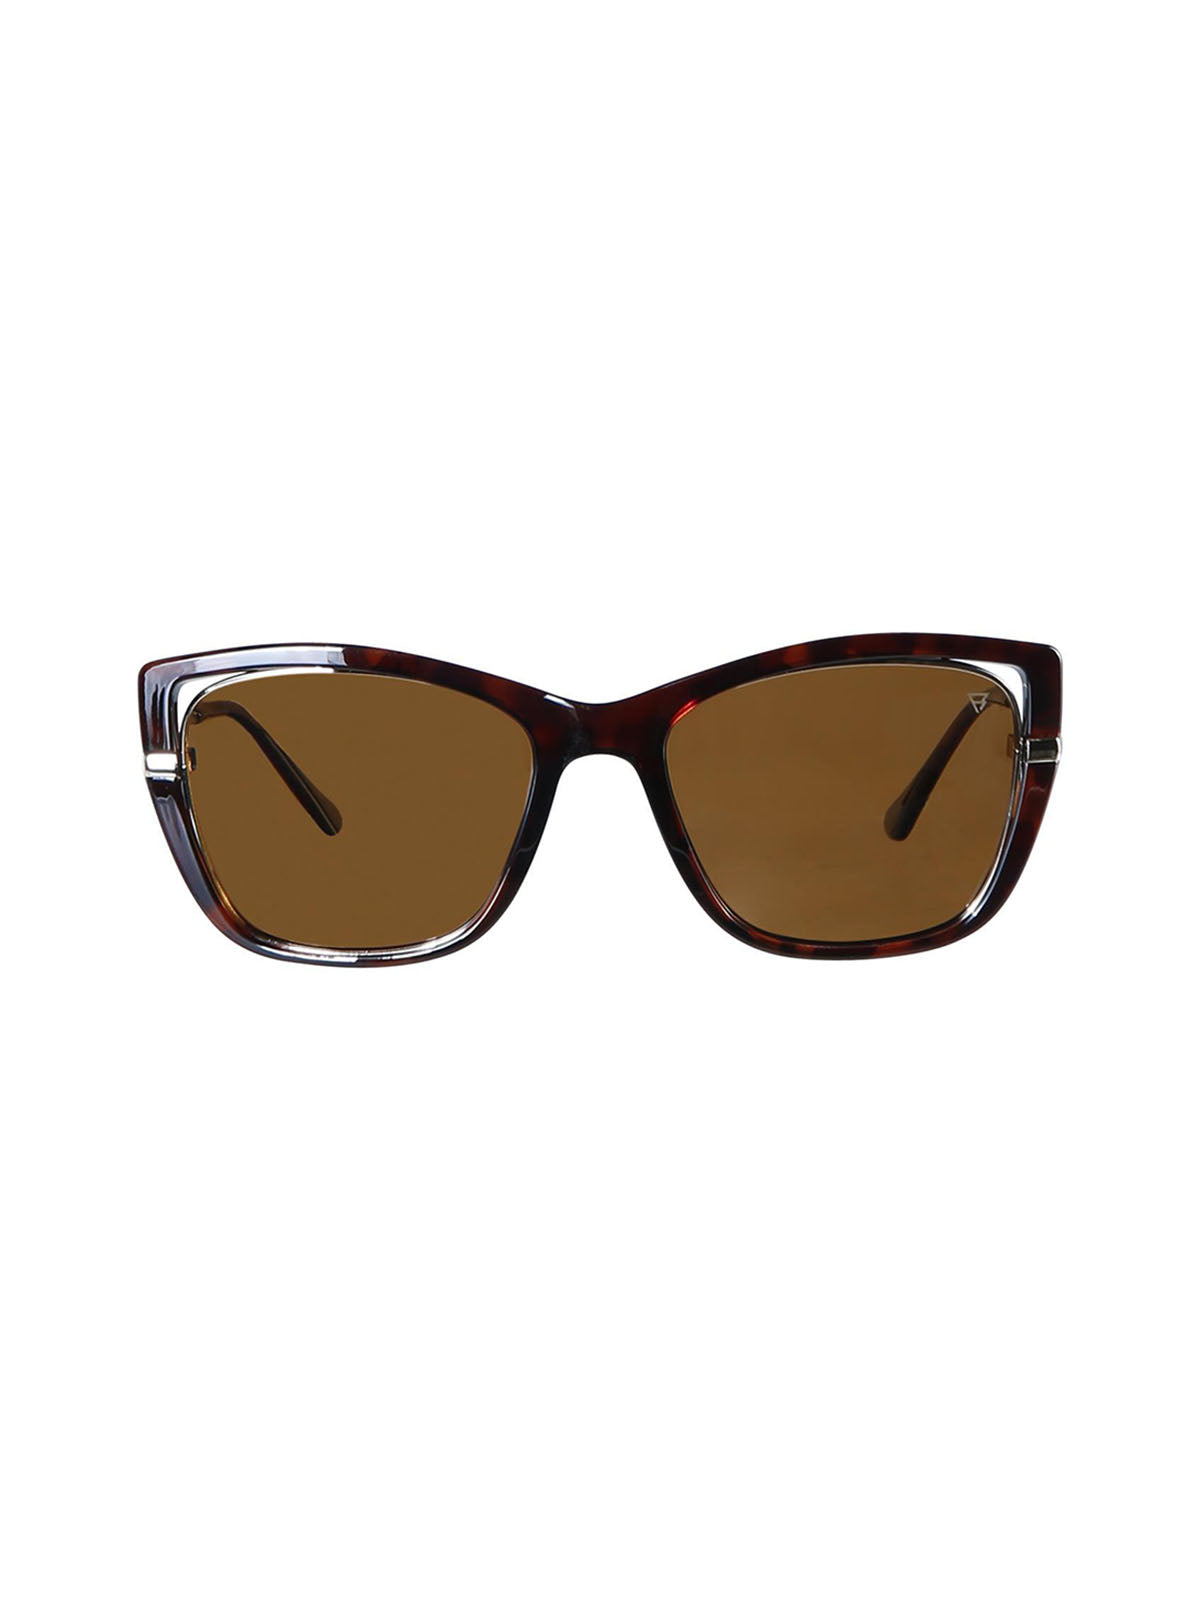 Parana 1 Sunglasses | Brown